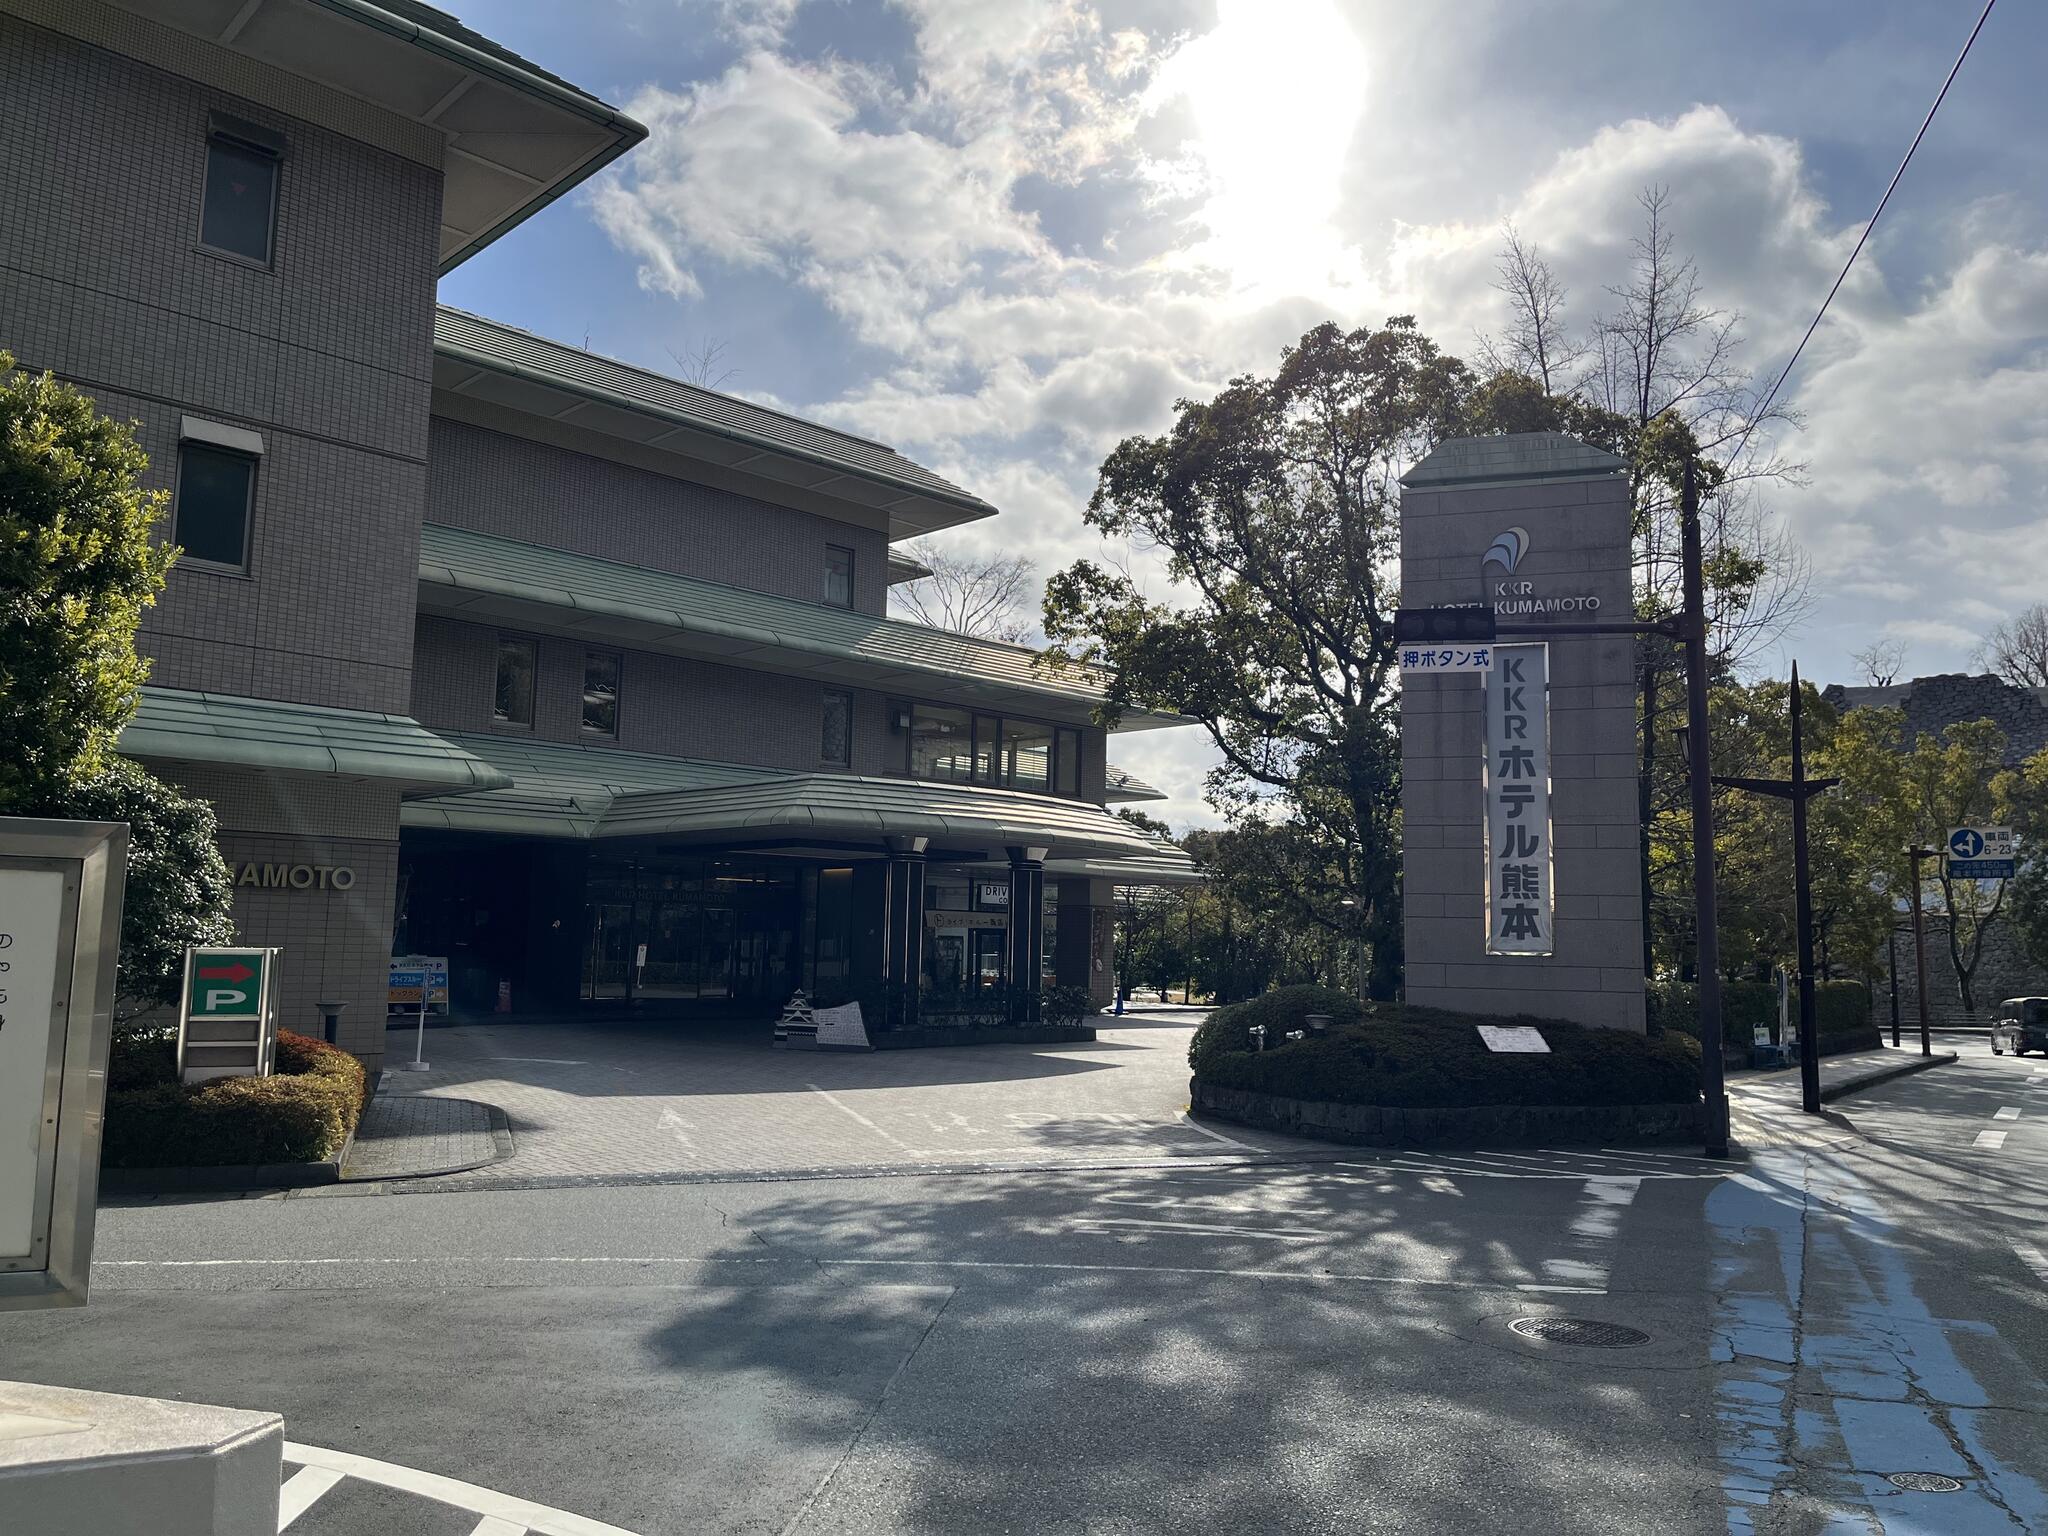 KKRホテル熊本(国家公務員共済組合連合会 熊本共済会館)の代表写真7